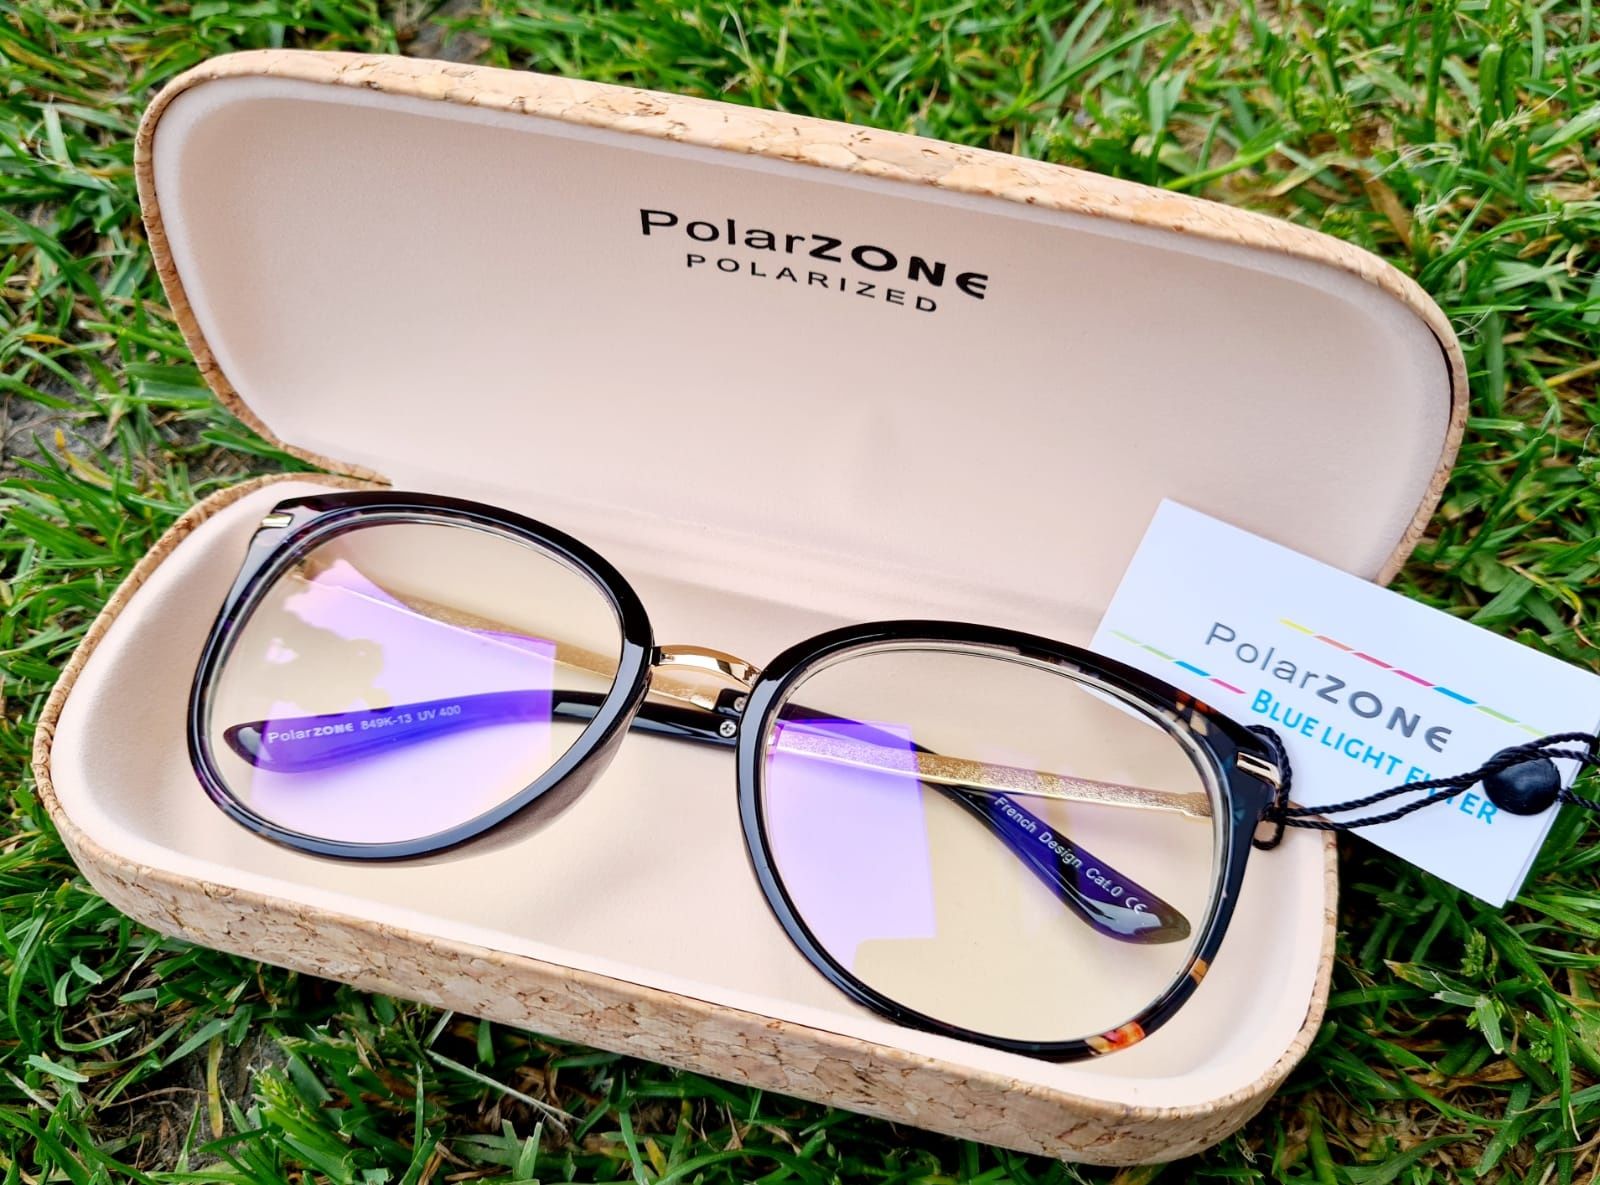 Nowe modne okulary do komputera marki Polarzone